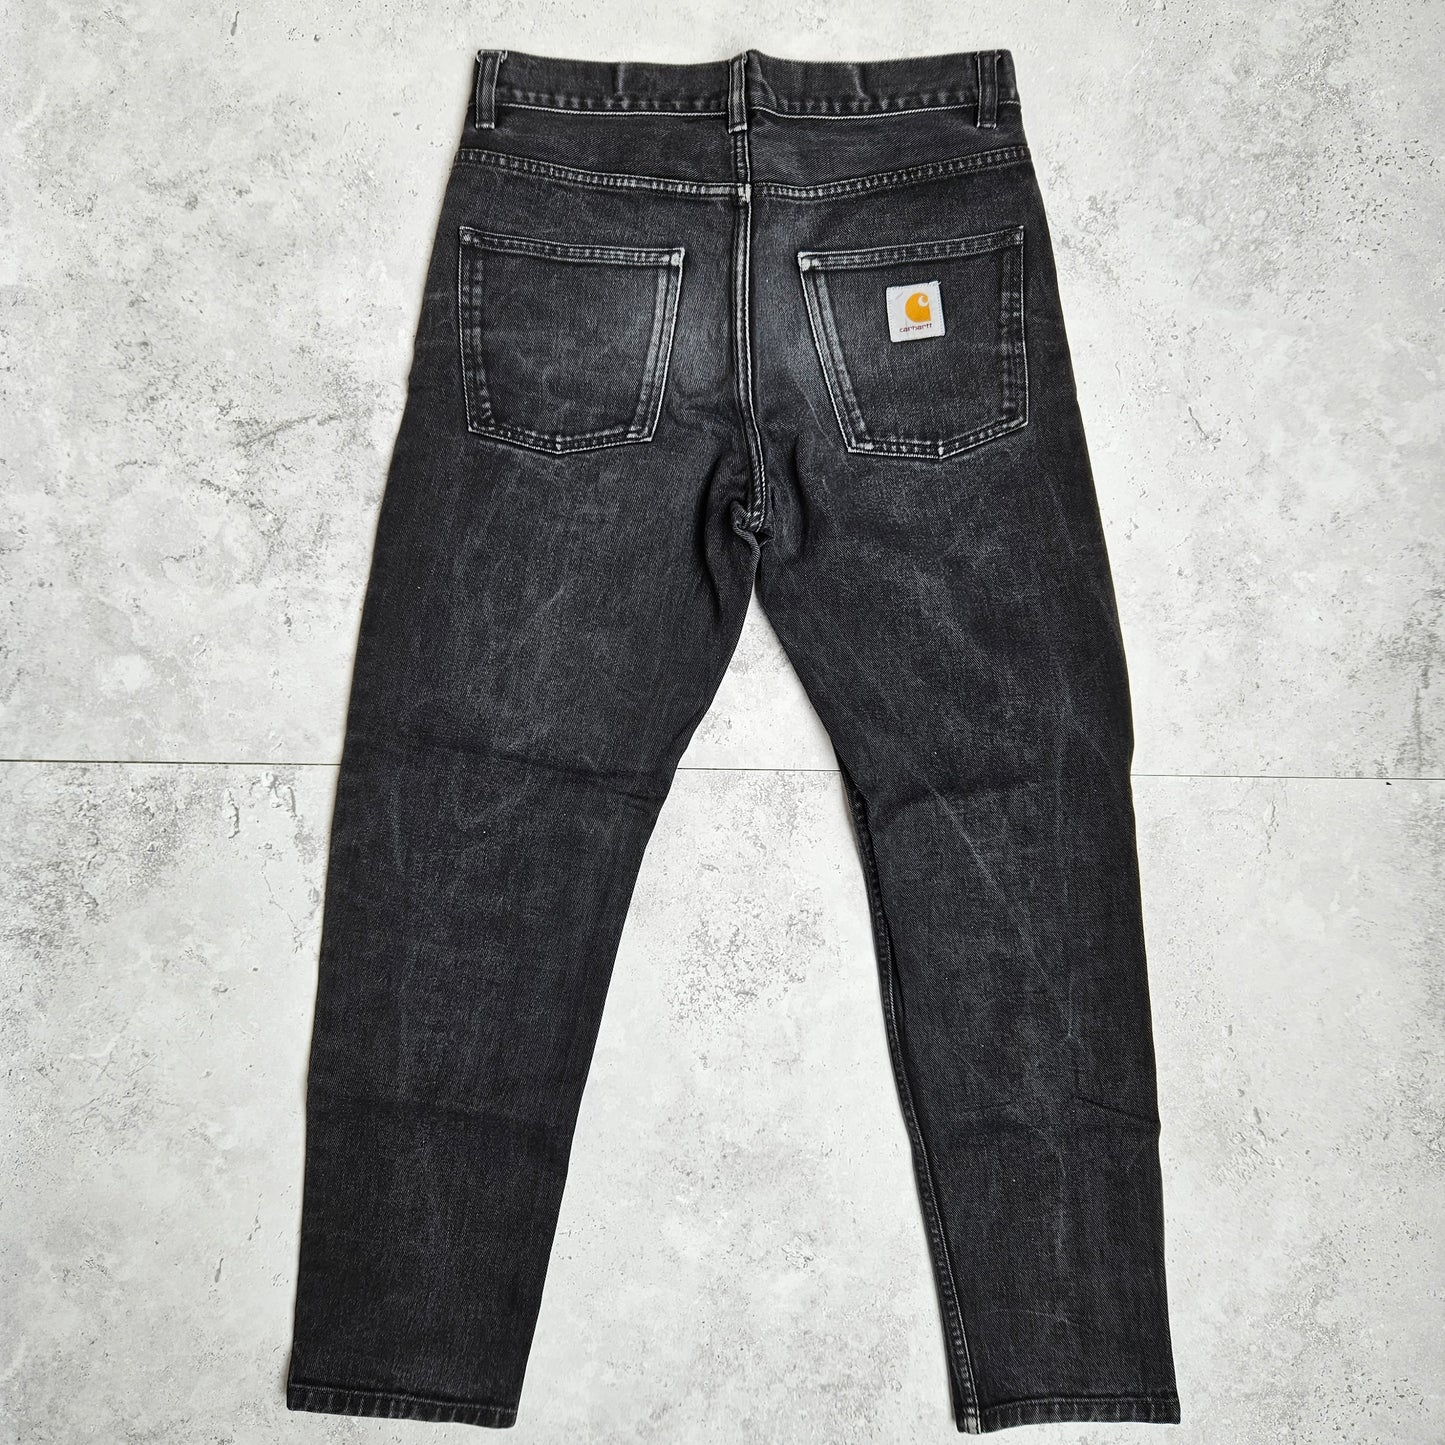 Carhartt Wip Black Denim Jeans (29)